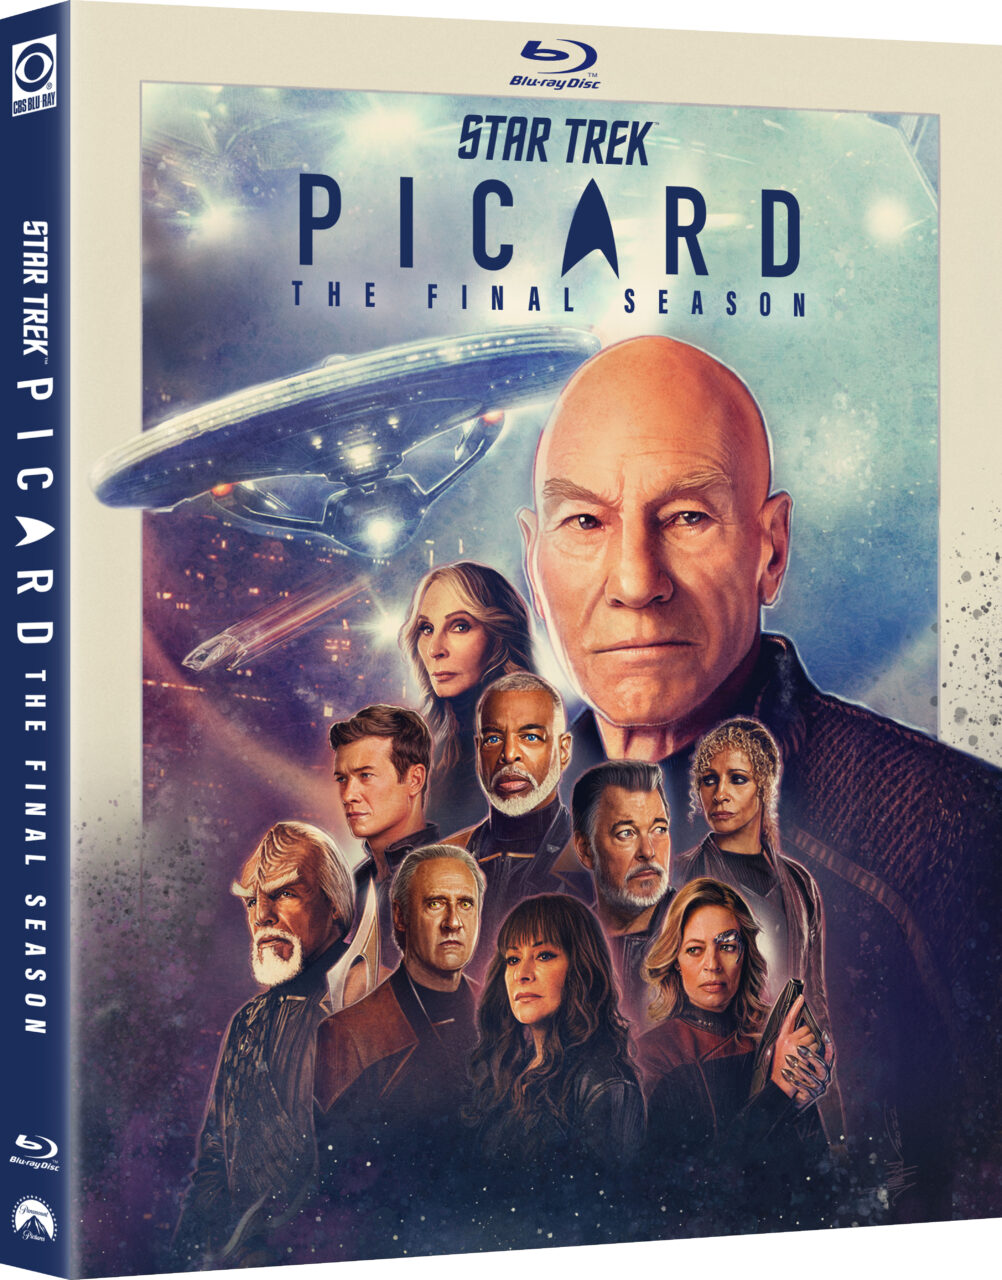 Star Trek: Picard: The Final Season Blu-Ray cover (Paramount Home Entertainment)